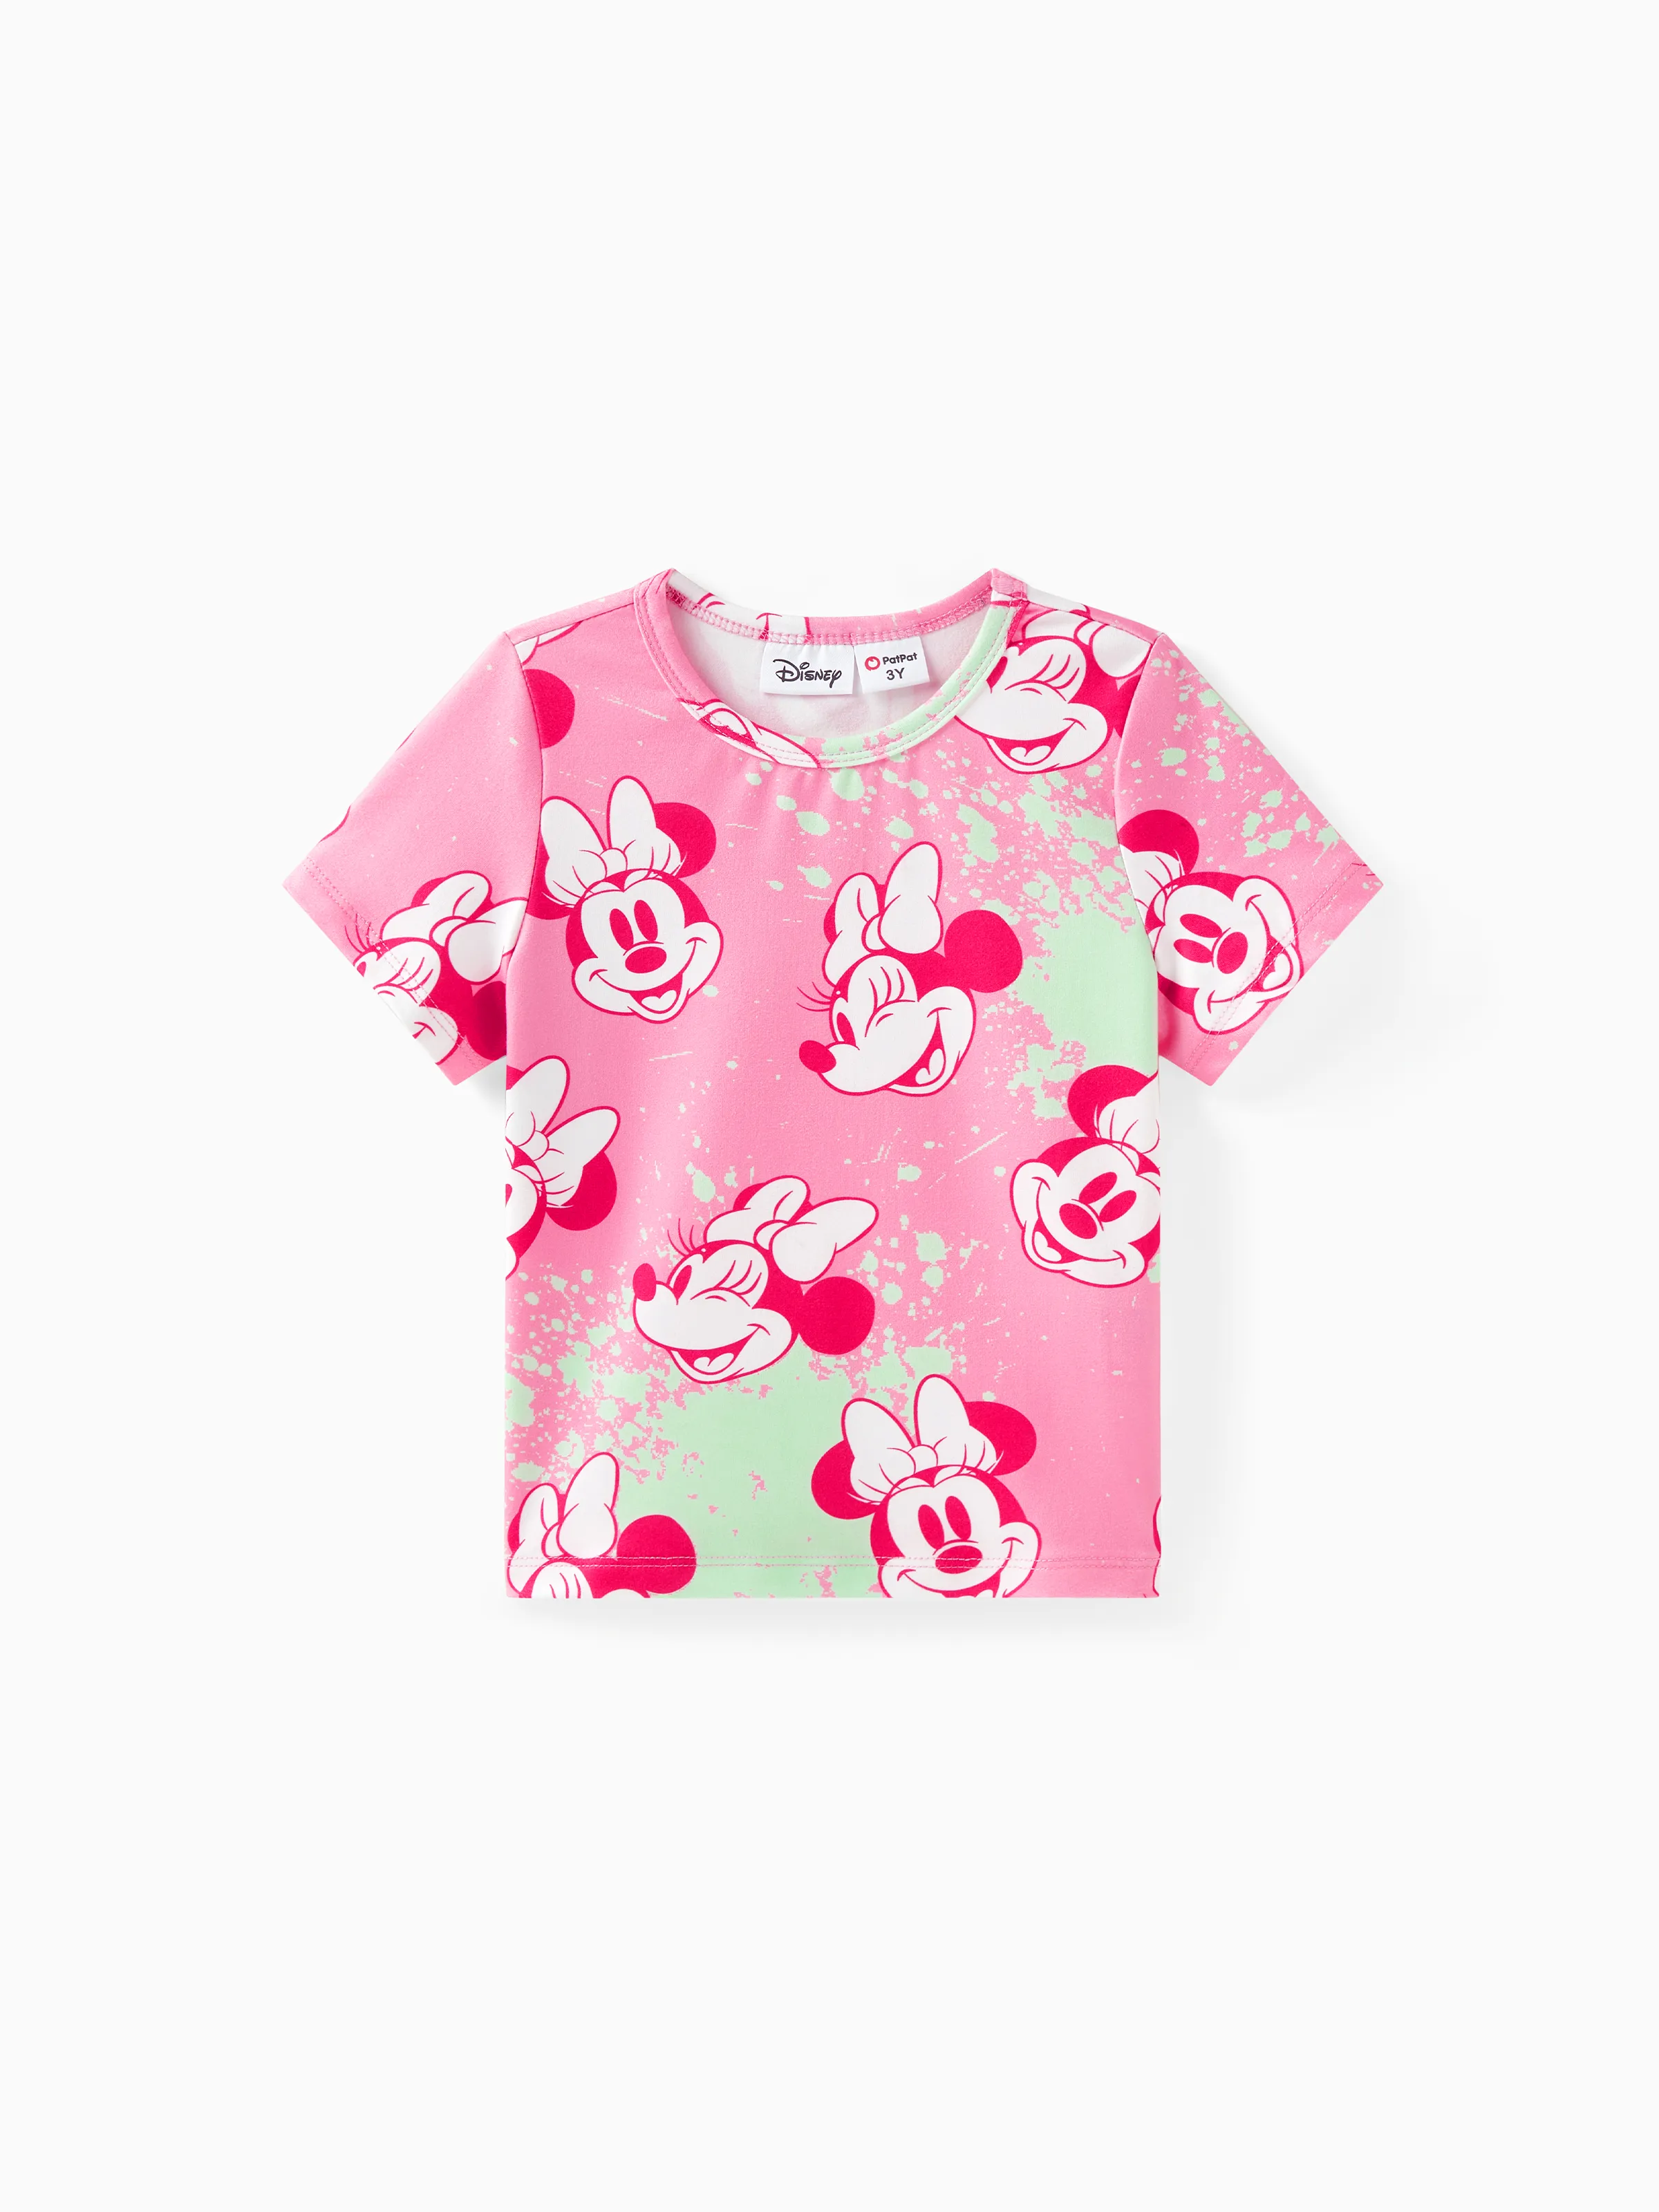 

Disney Mickey and Friends Toddler Girl/Toddler Boy Tie dye T-shirt